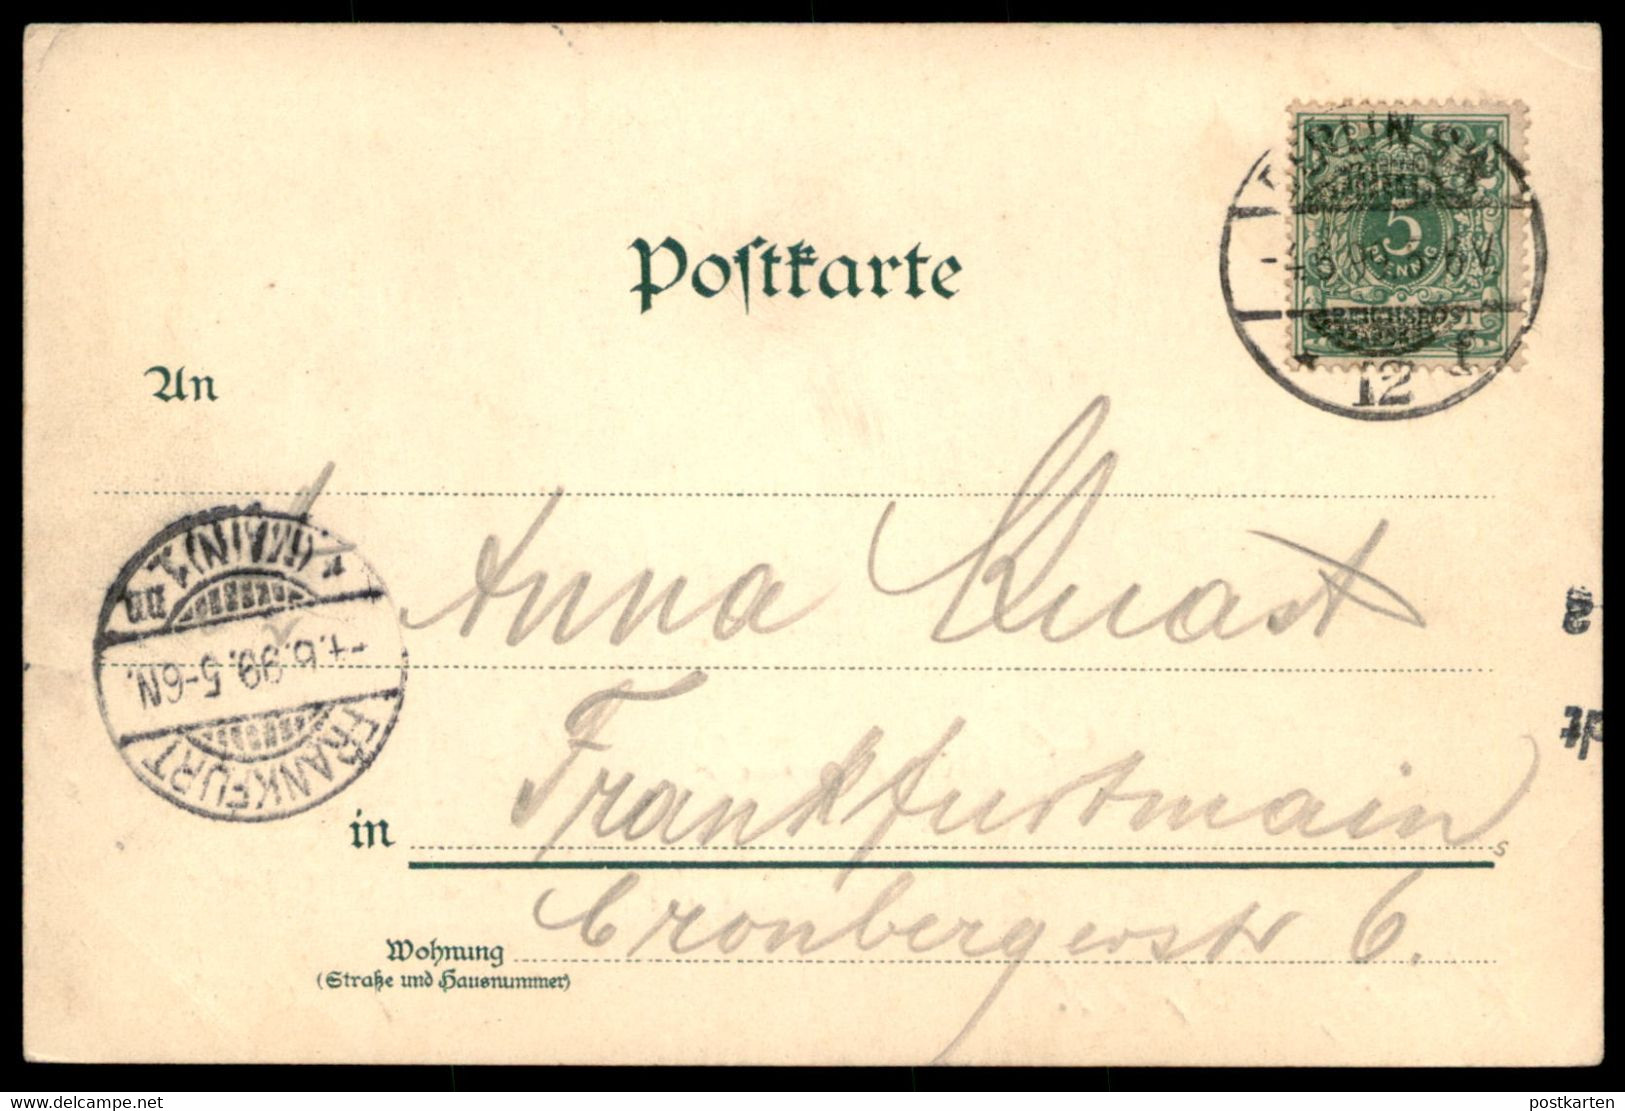 ALTE LITHO POSTKARTE GRUSS AUS TREPTOW BERLIN PAAR IM BOOT 1899 Cpa Postcard AK Ansichtskarte - Treptow